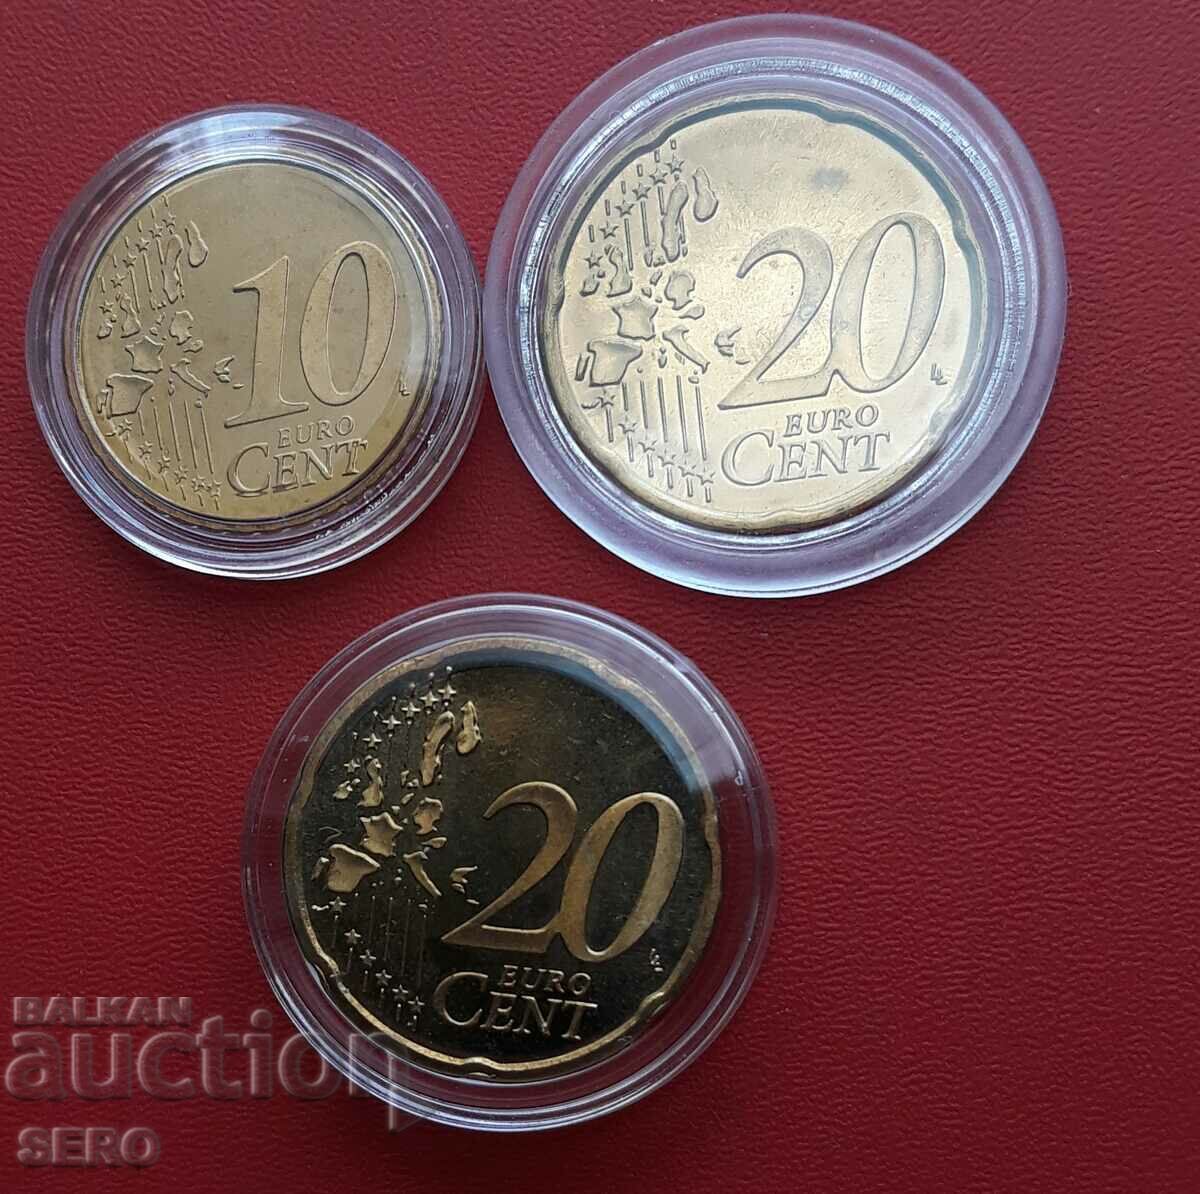 Lot mixt de monede de 3 euro - Luxemburg și Finlanda